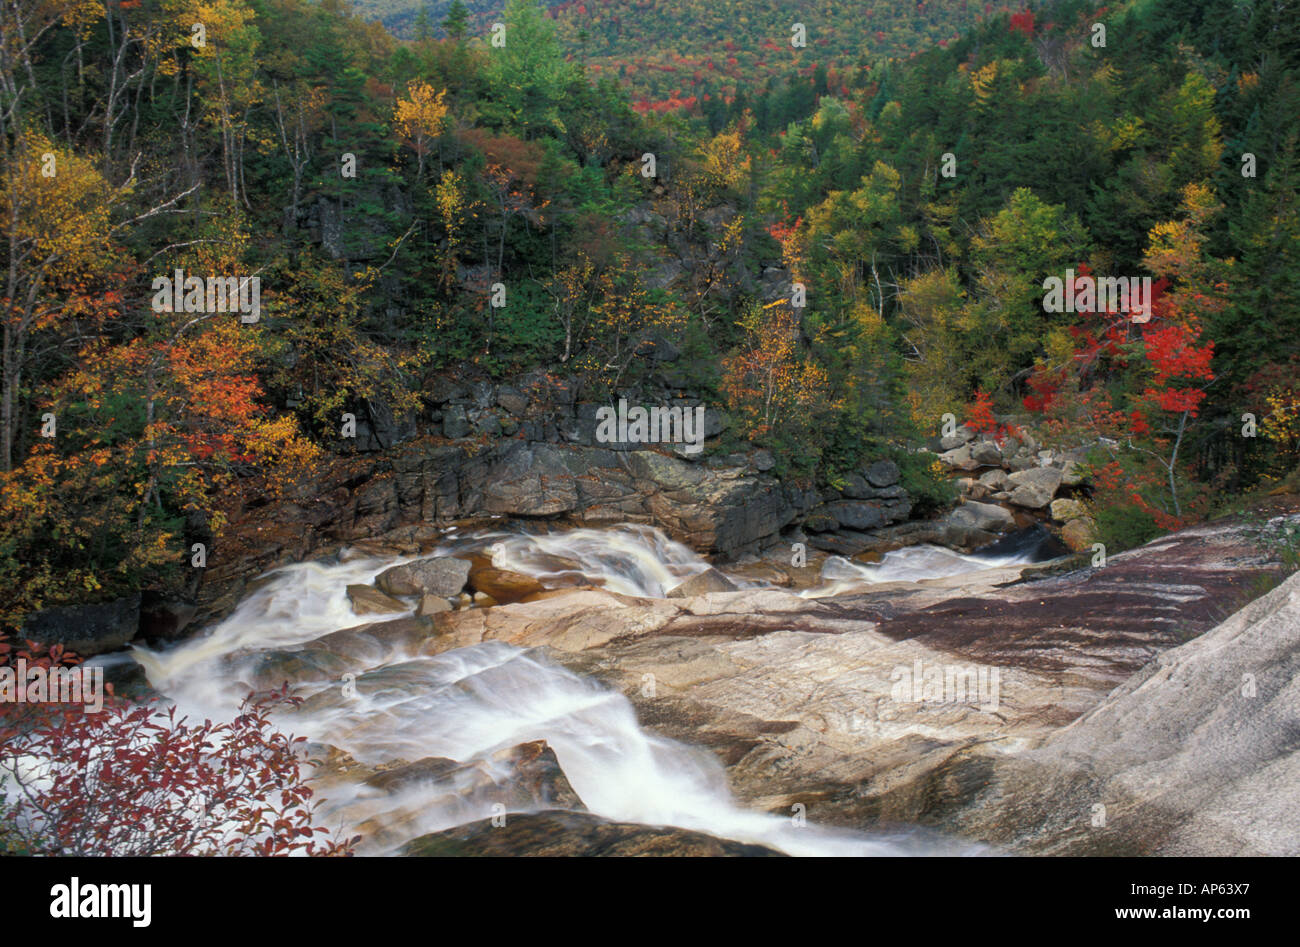 Thoreau verliebt sich in den White Mountain National Forest. Pemigewasset Wilderness Area. Appalachian Trail. Herbstfarben. Lincoln, NH Stockfoto